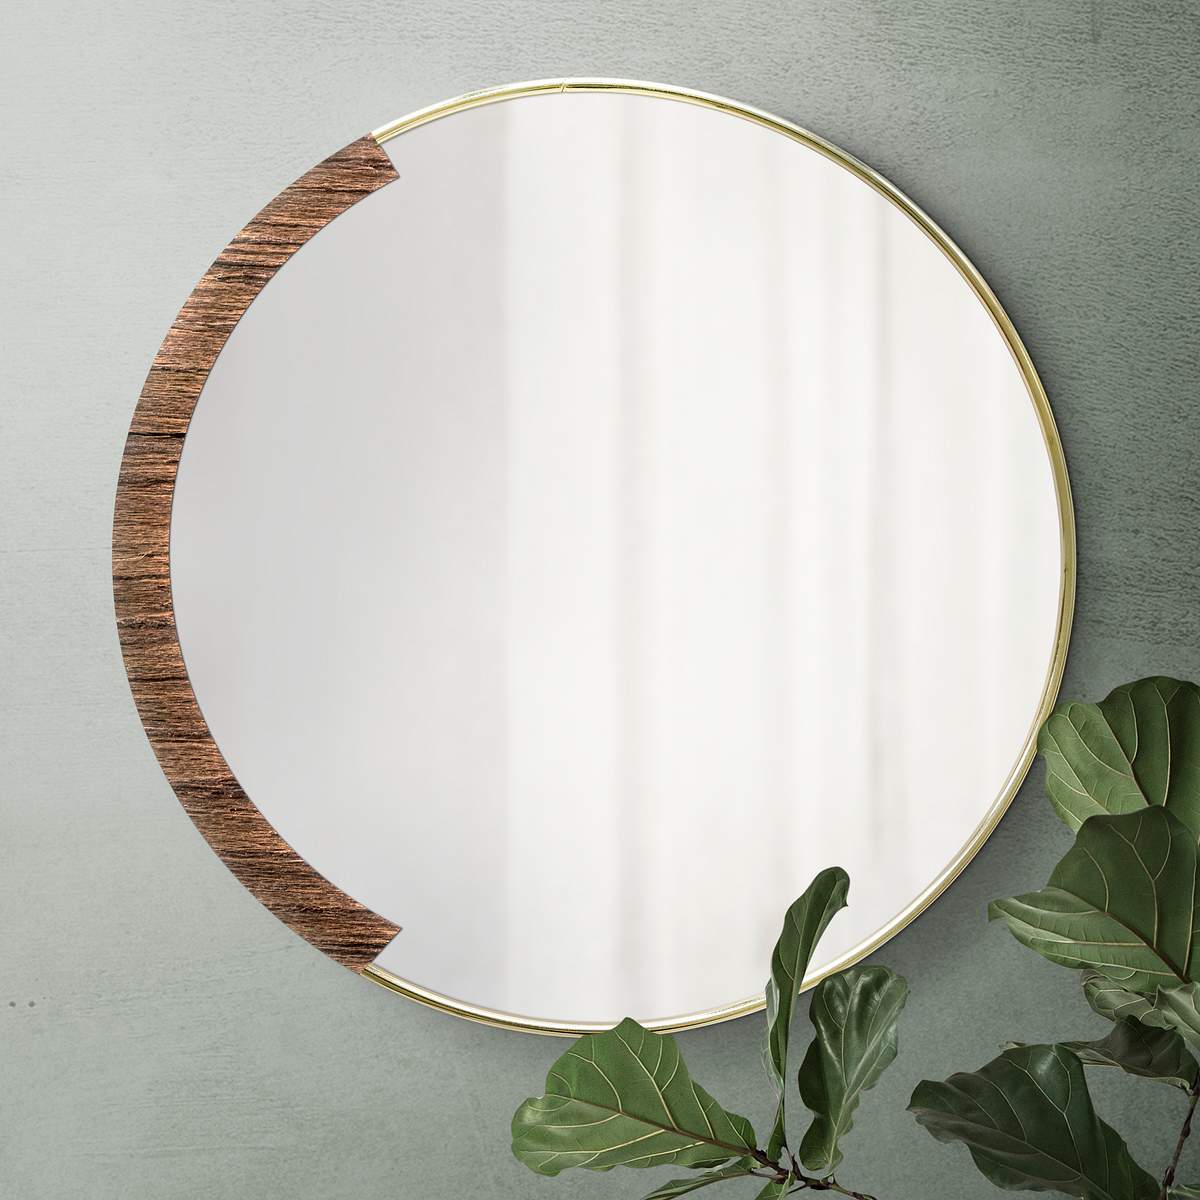 Circular Mirror With A Wooden Premium Psd Rawpixel